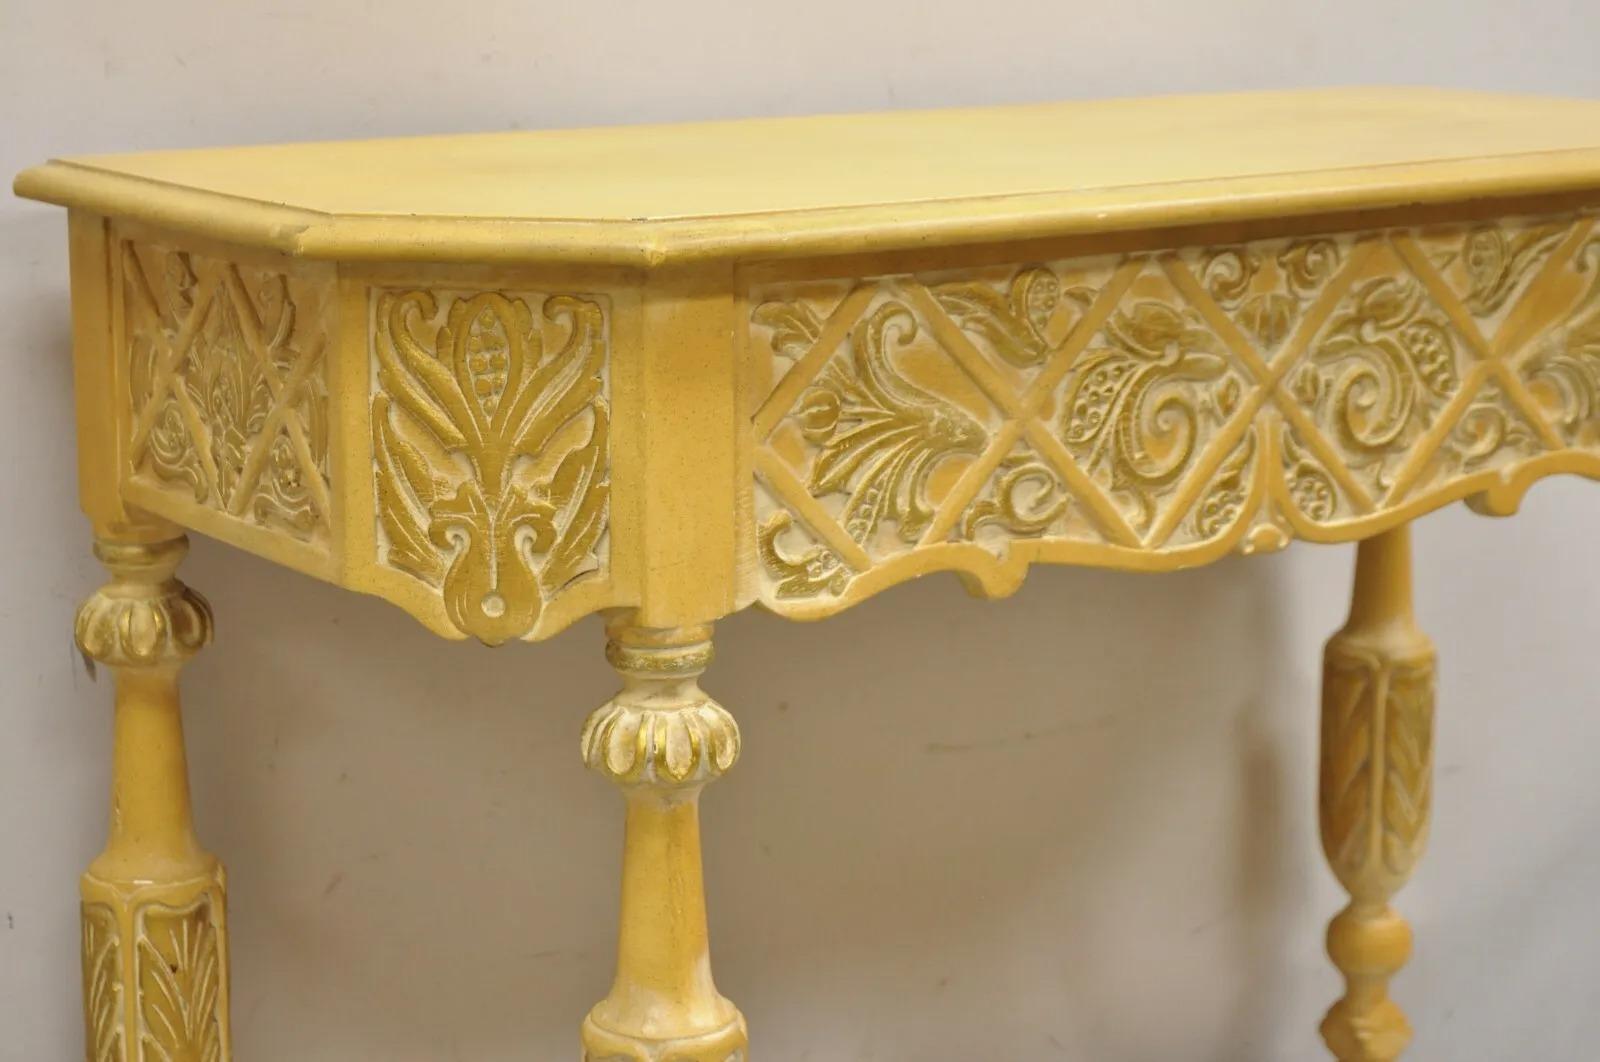 Gothic Renaissance Revival Painted Hall Altar Console Table Chair Set - 4 Pc Set For Sale 1